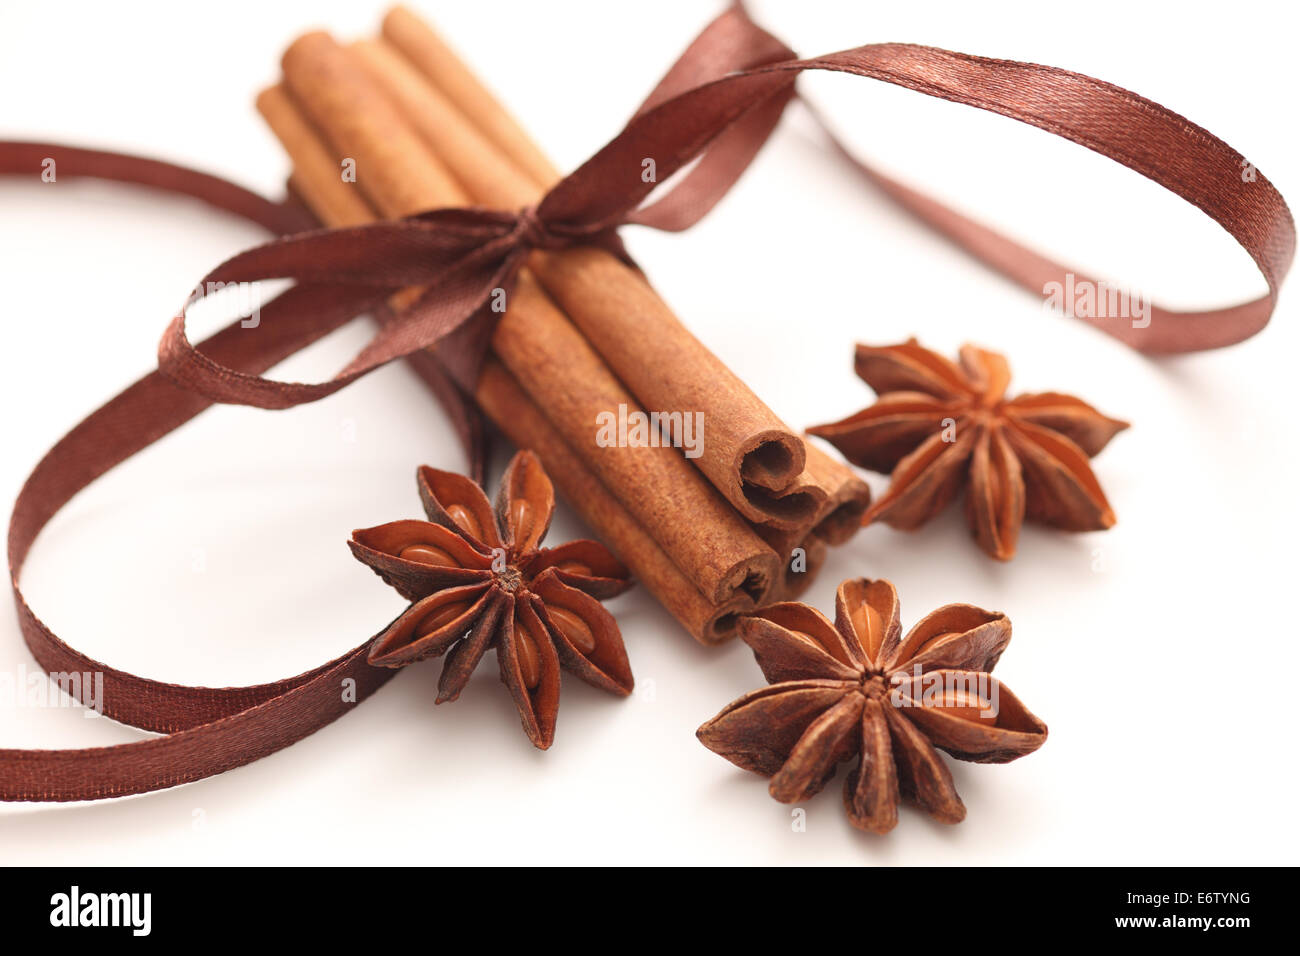 Cinnamon sticks and star anise. White background. Stock Photo